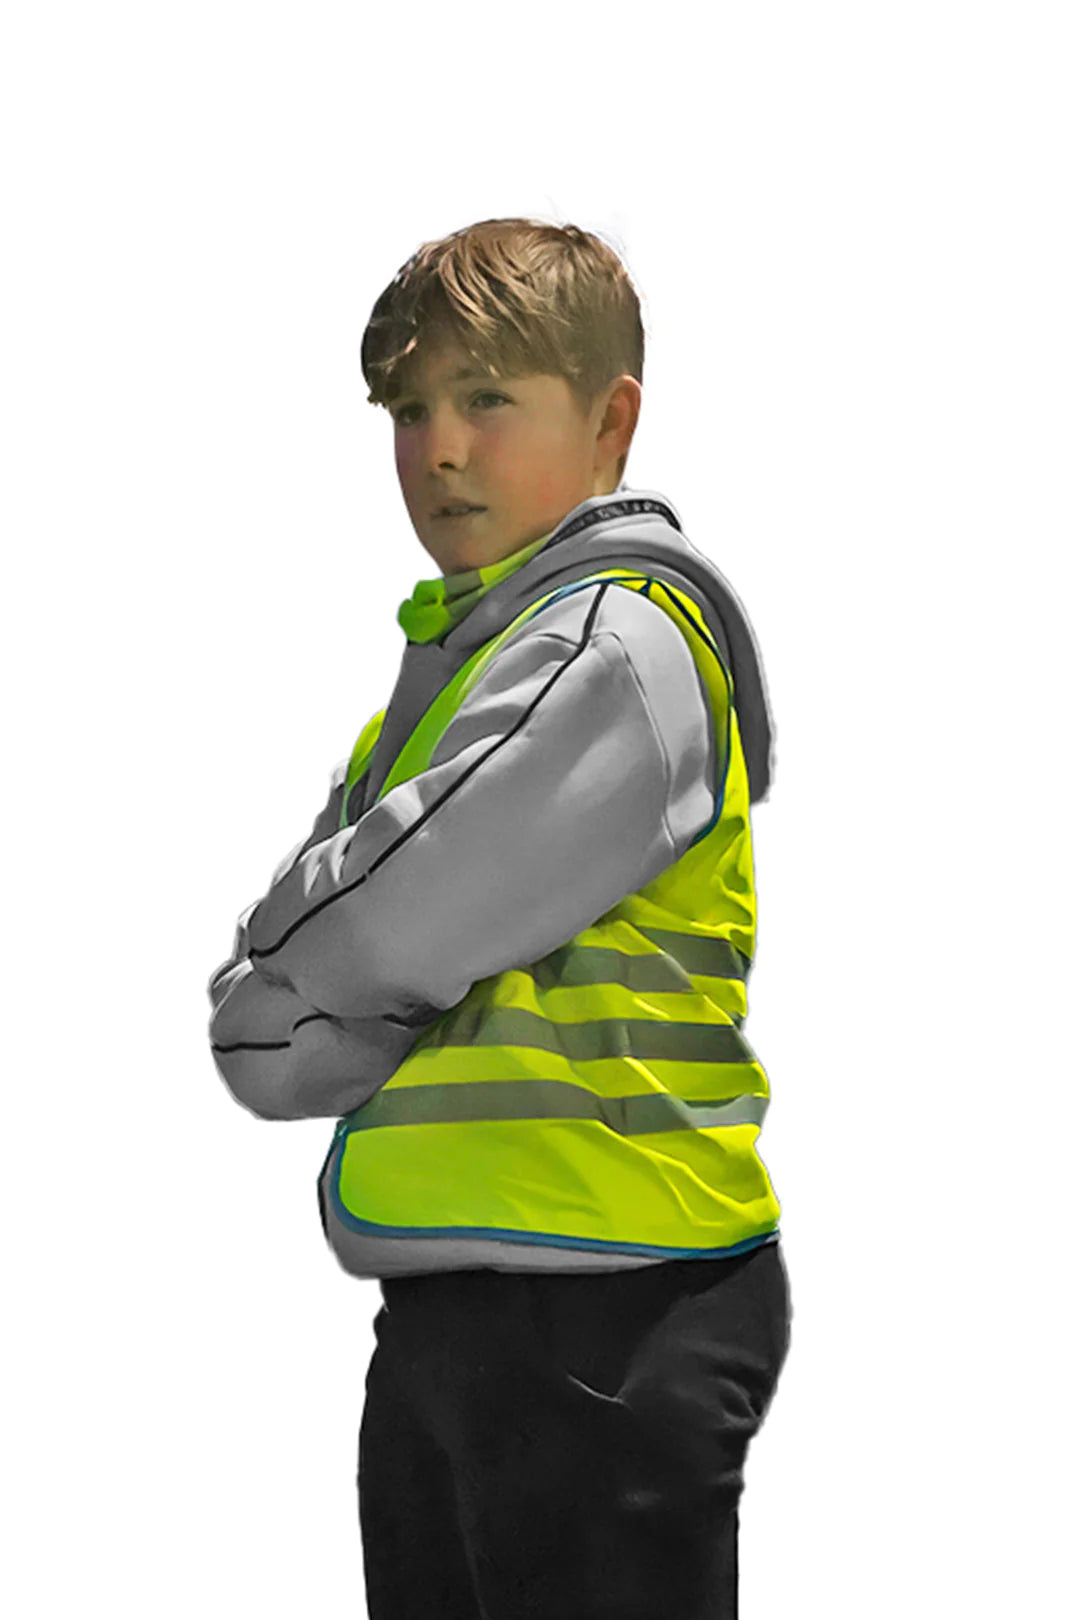 Bodylite - Kids reflective vest